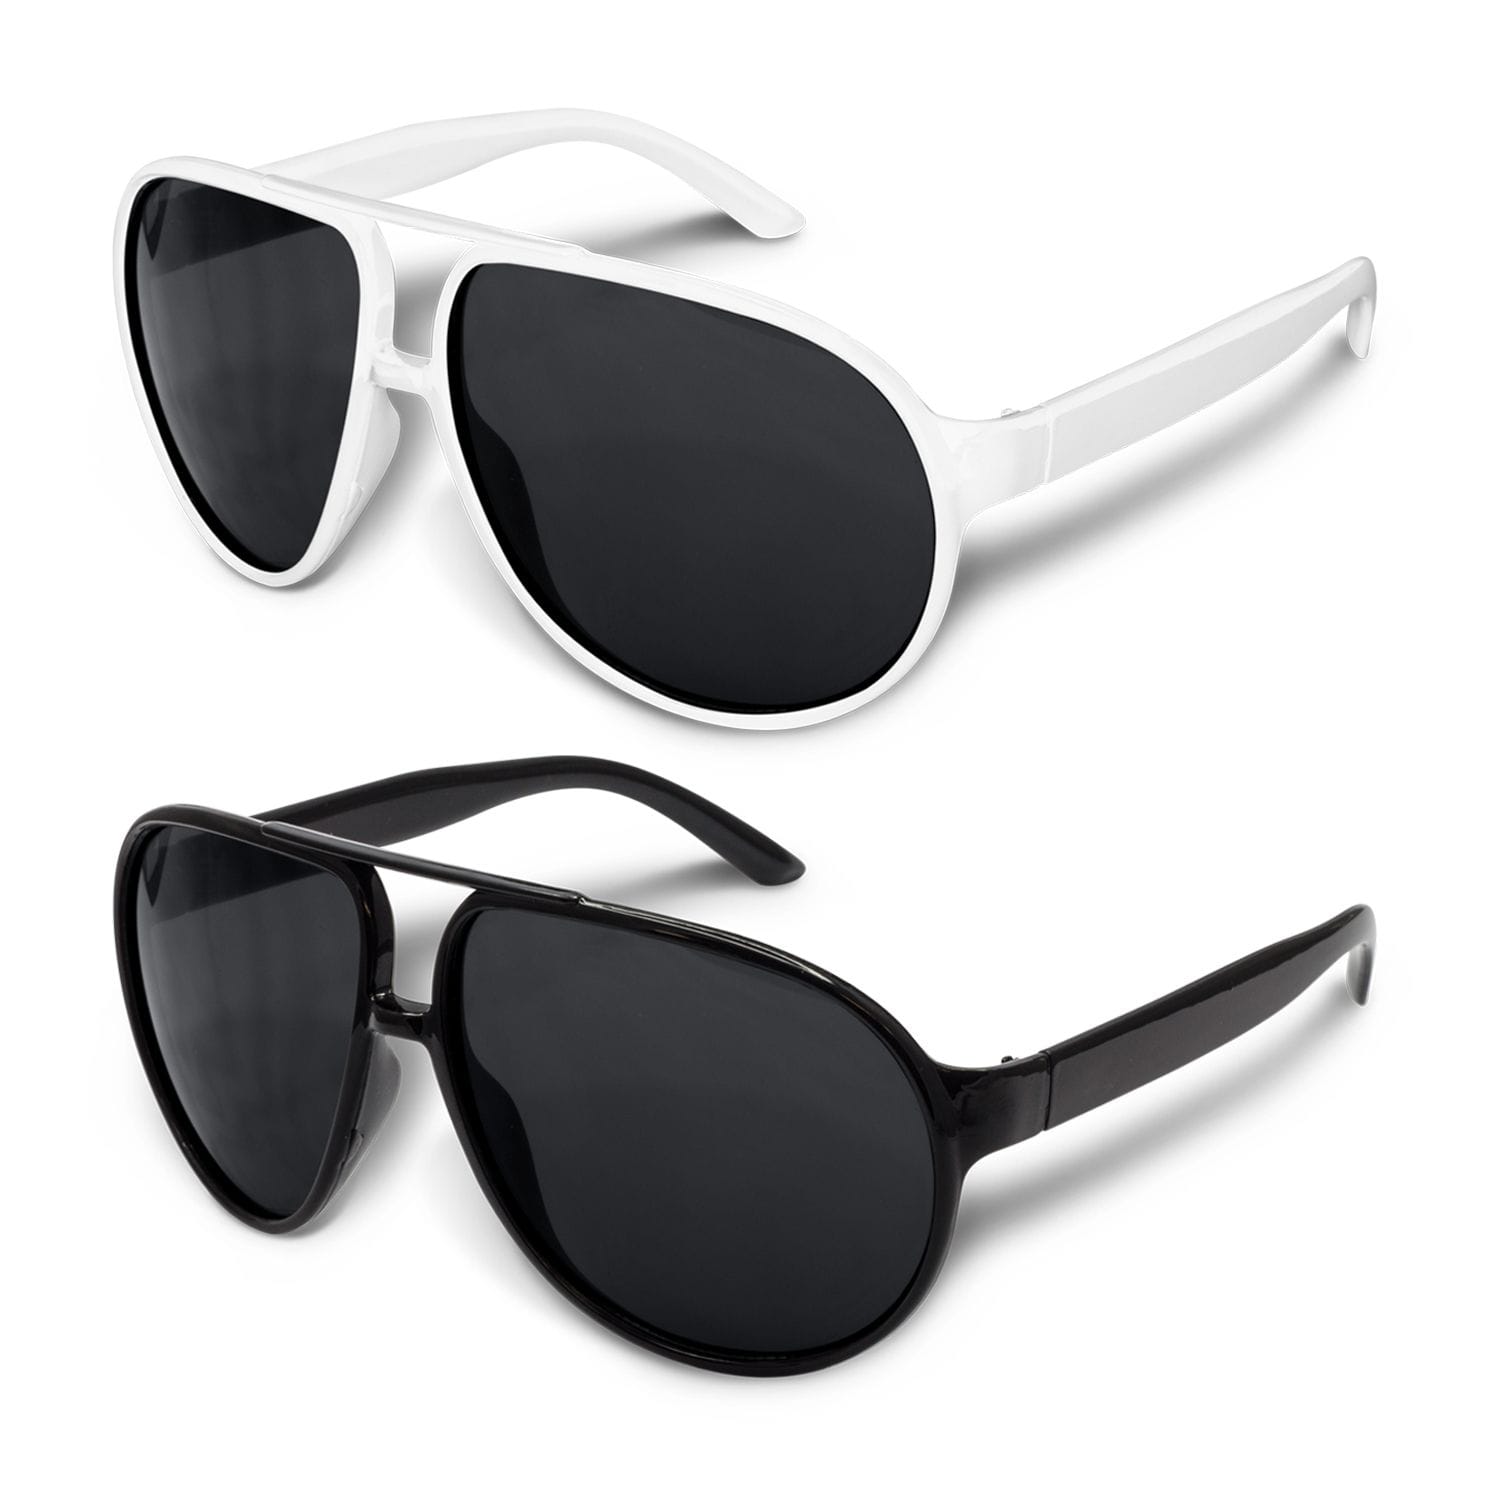 Aviator promotional sunglasses